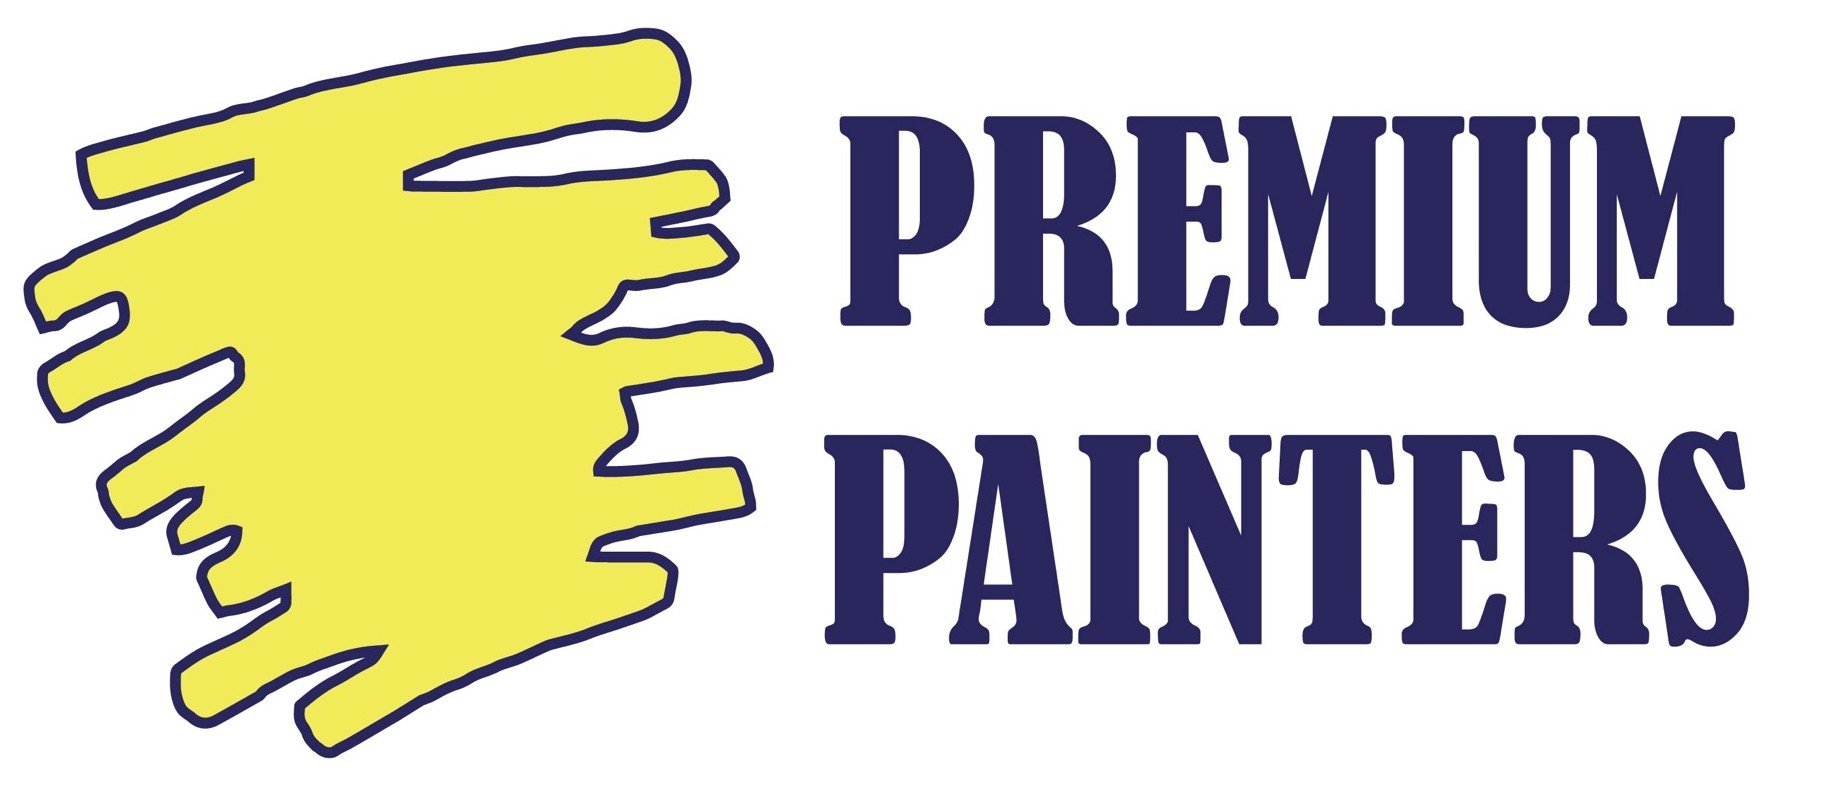 1 Premium Painters-01 (1) - Copy (1).jpg